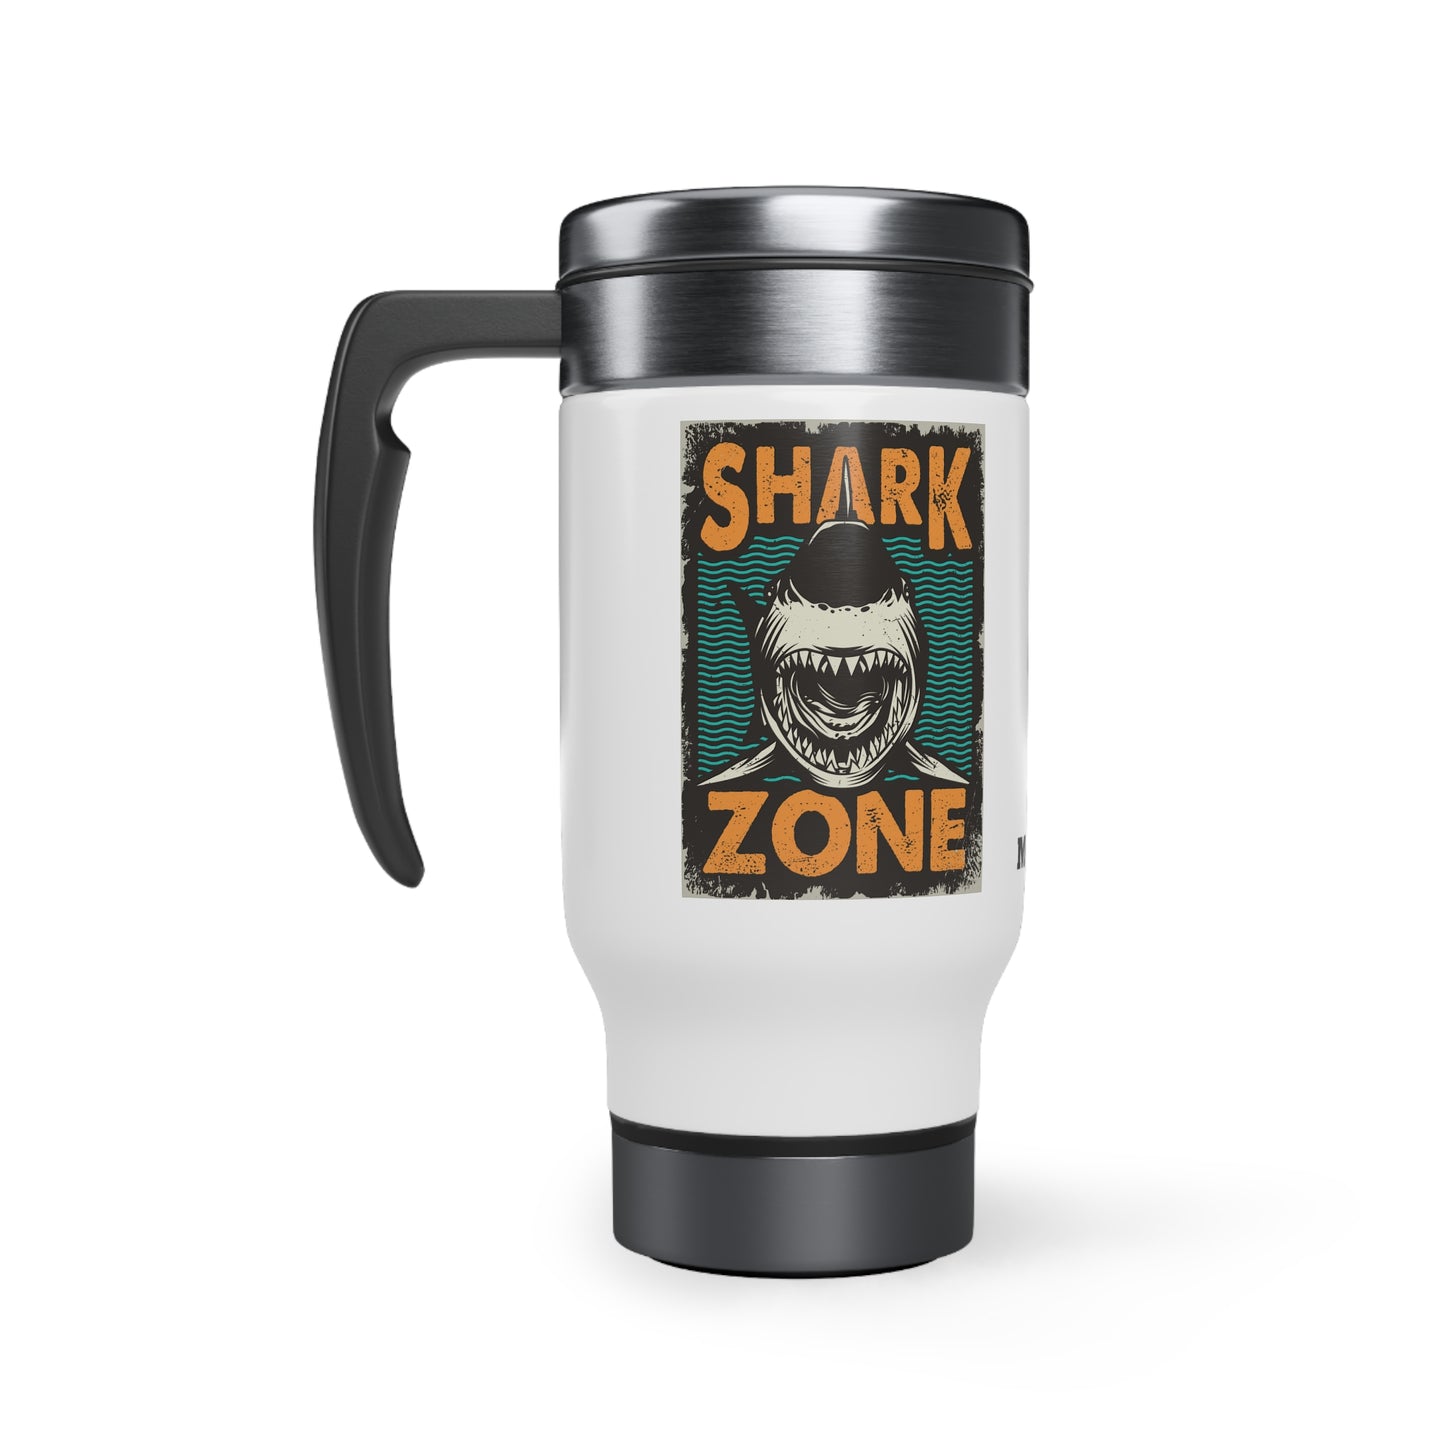 Shark zone - Stainless Steel Travel Mug with Handle, 14oz